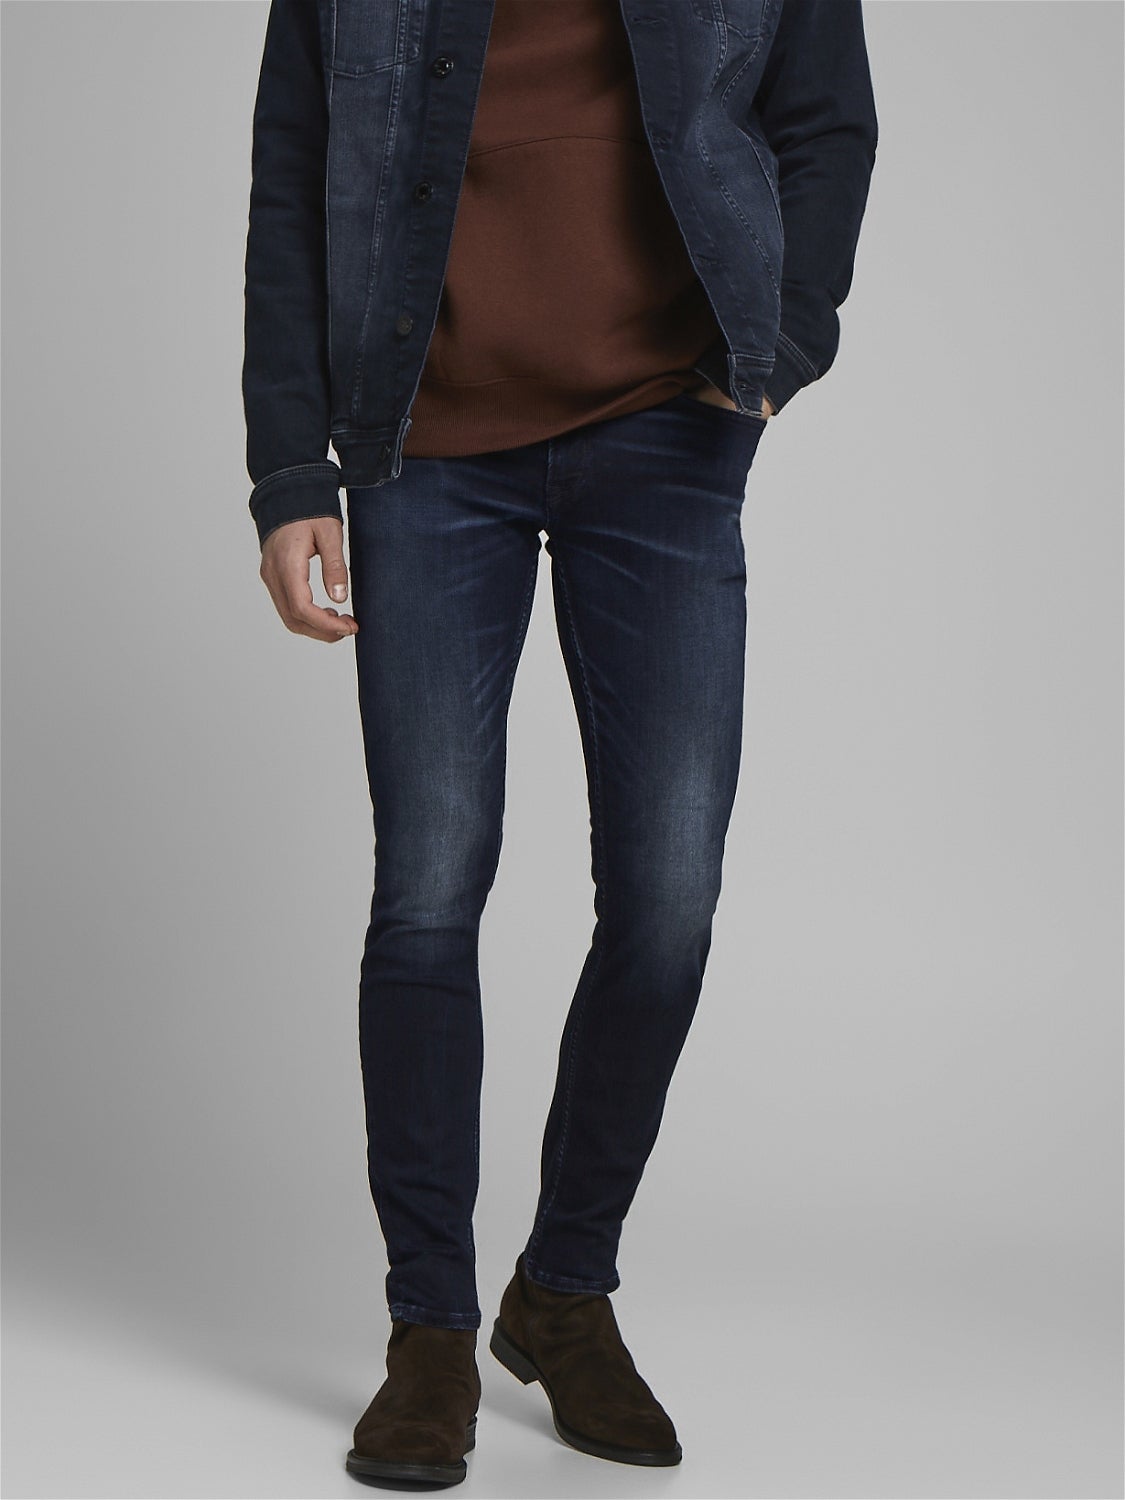 Jack & Jones Capri jeans Blau L HERREN Jeans Ripped Rabatt 67 % 